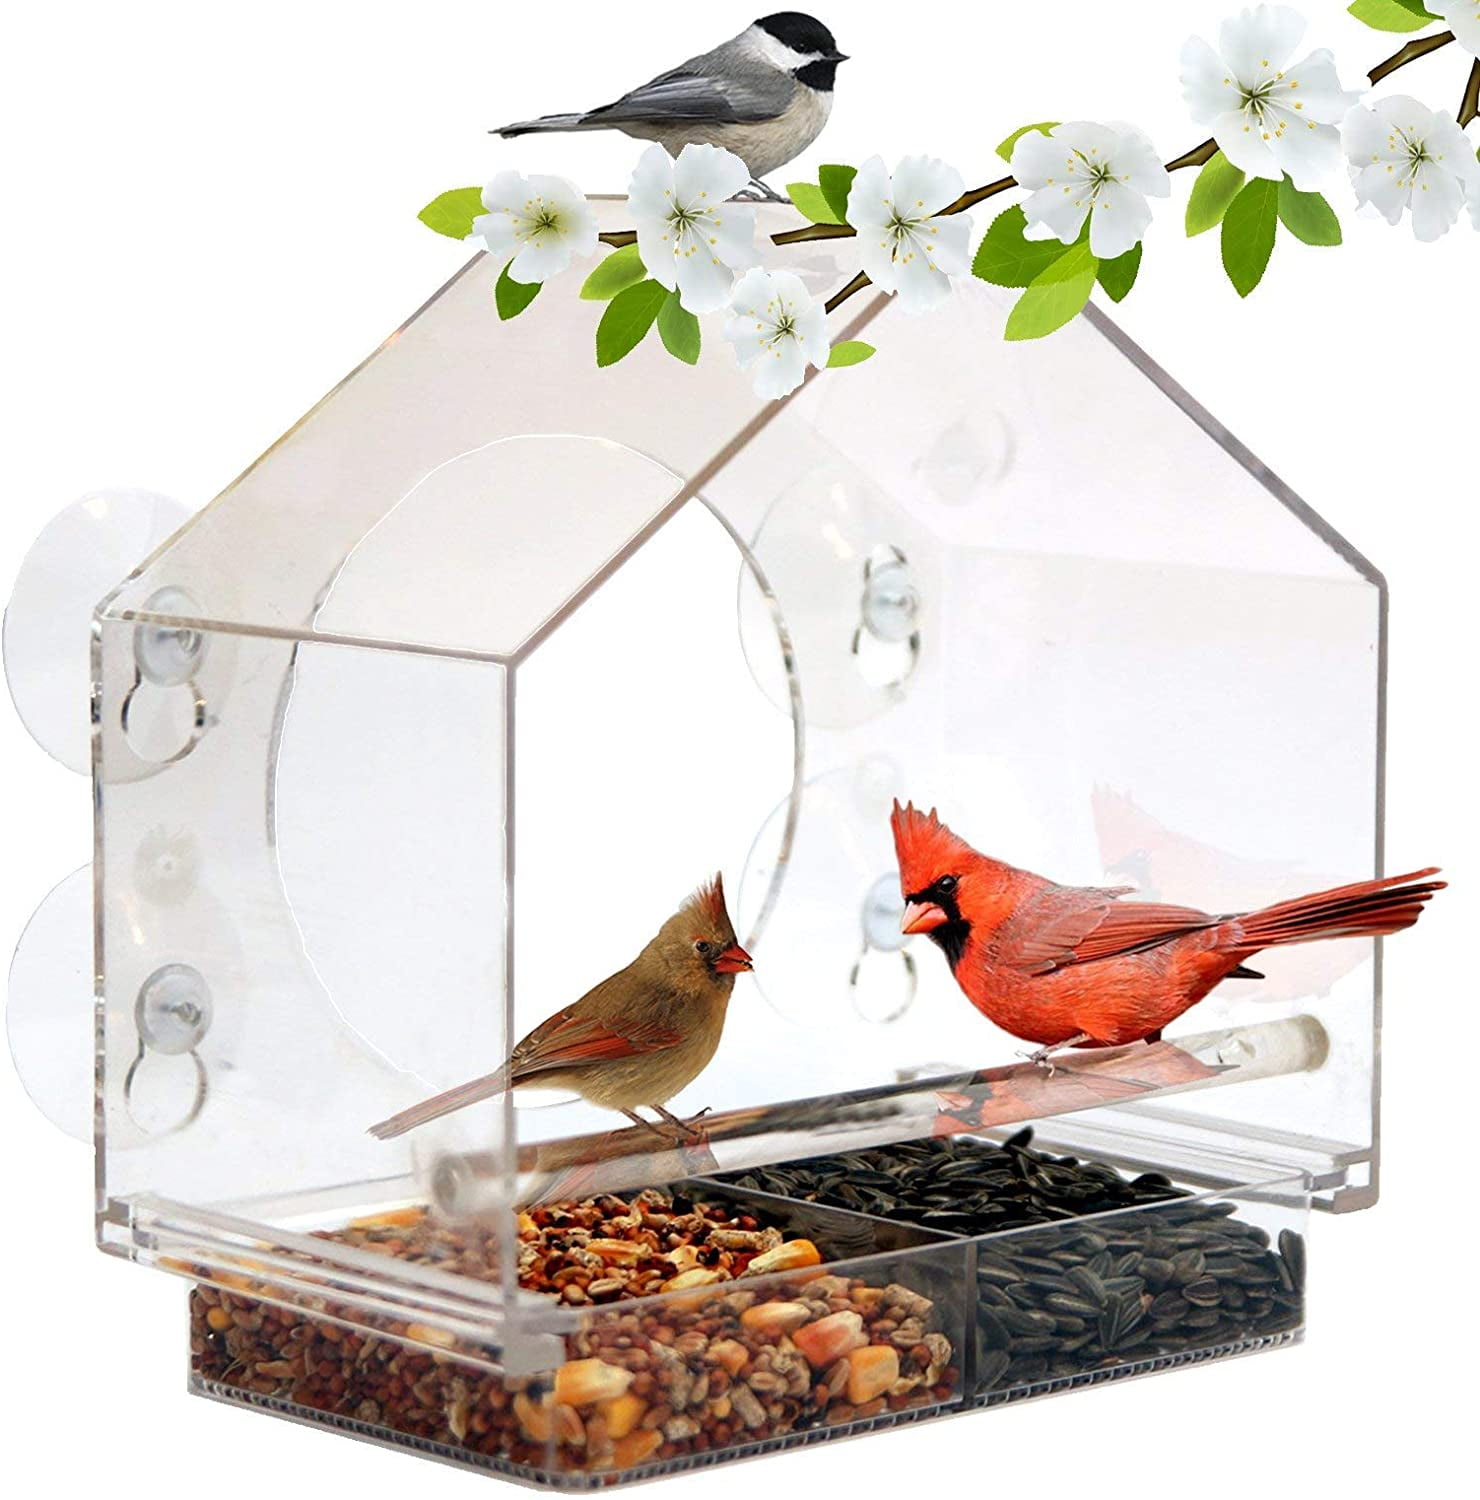 Garden Bird Feeding Table Clear Hanging Feeder Squirrel Proof Window Suction Cup 